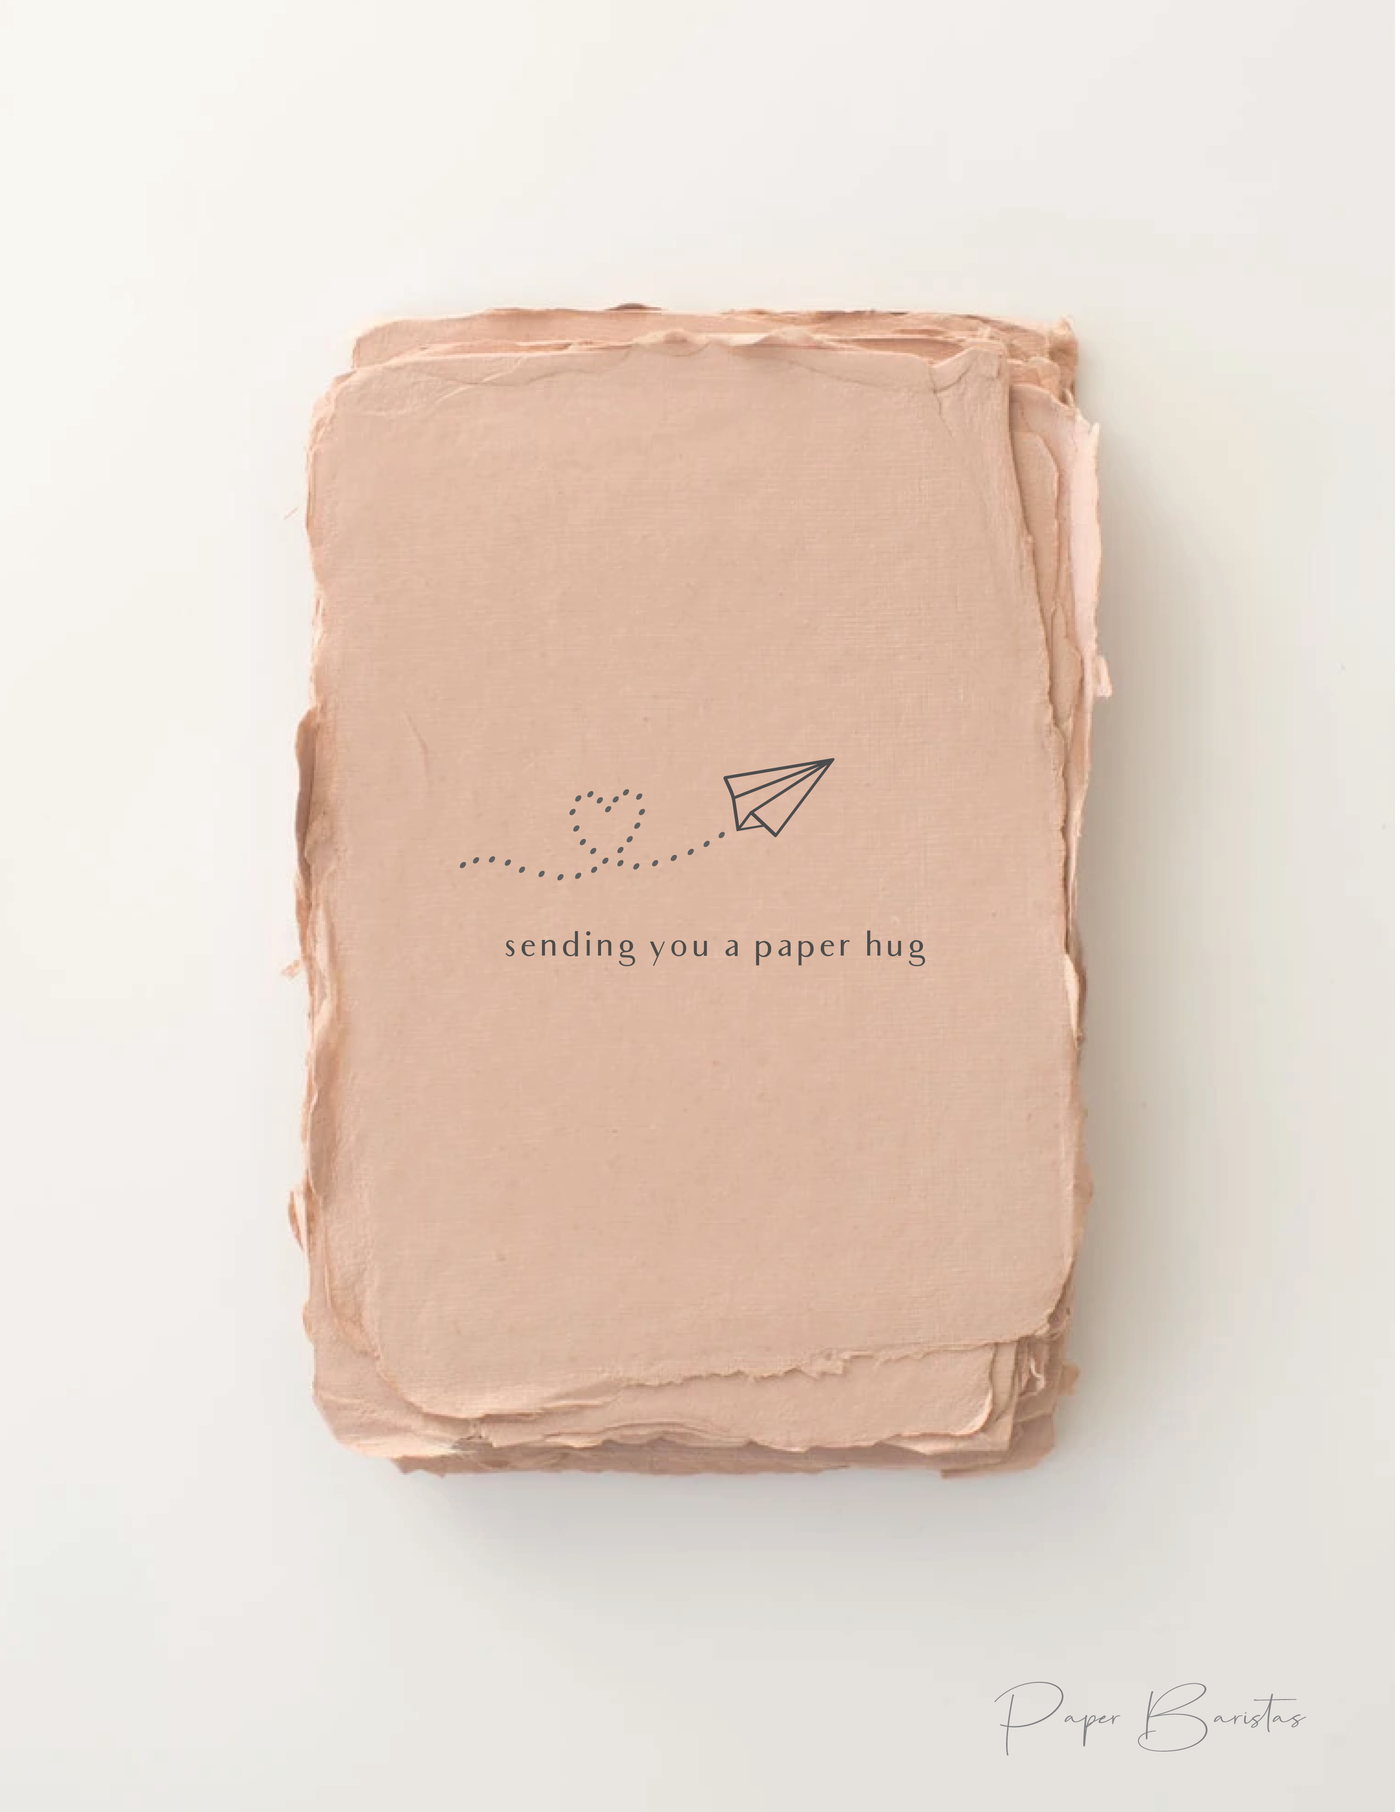 "Sending you a paper hug" Encouragement Greeting Card